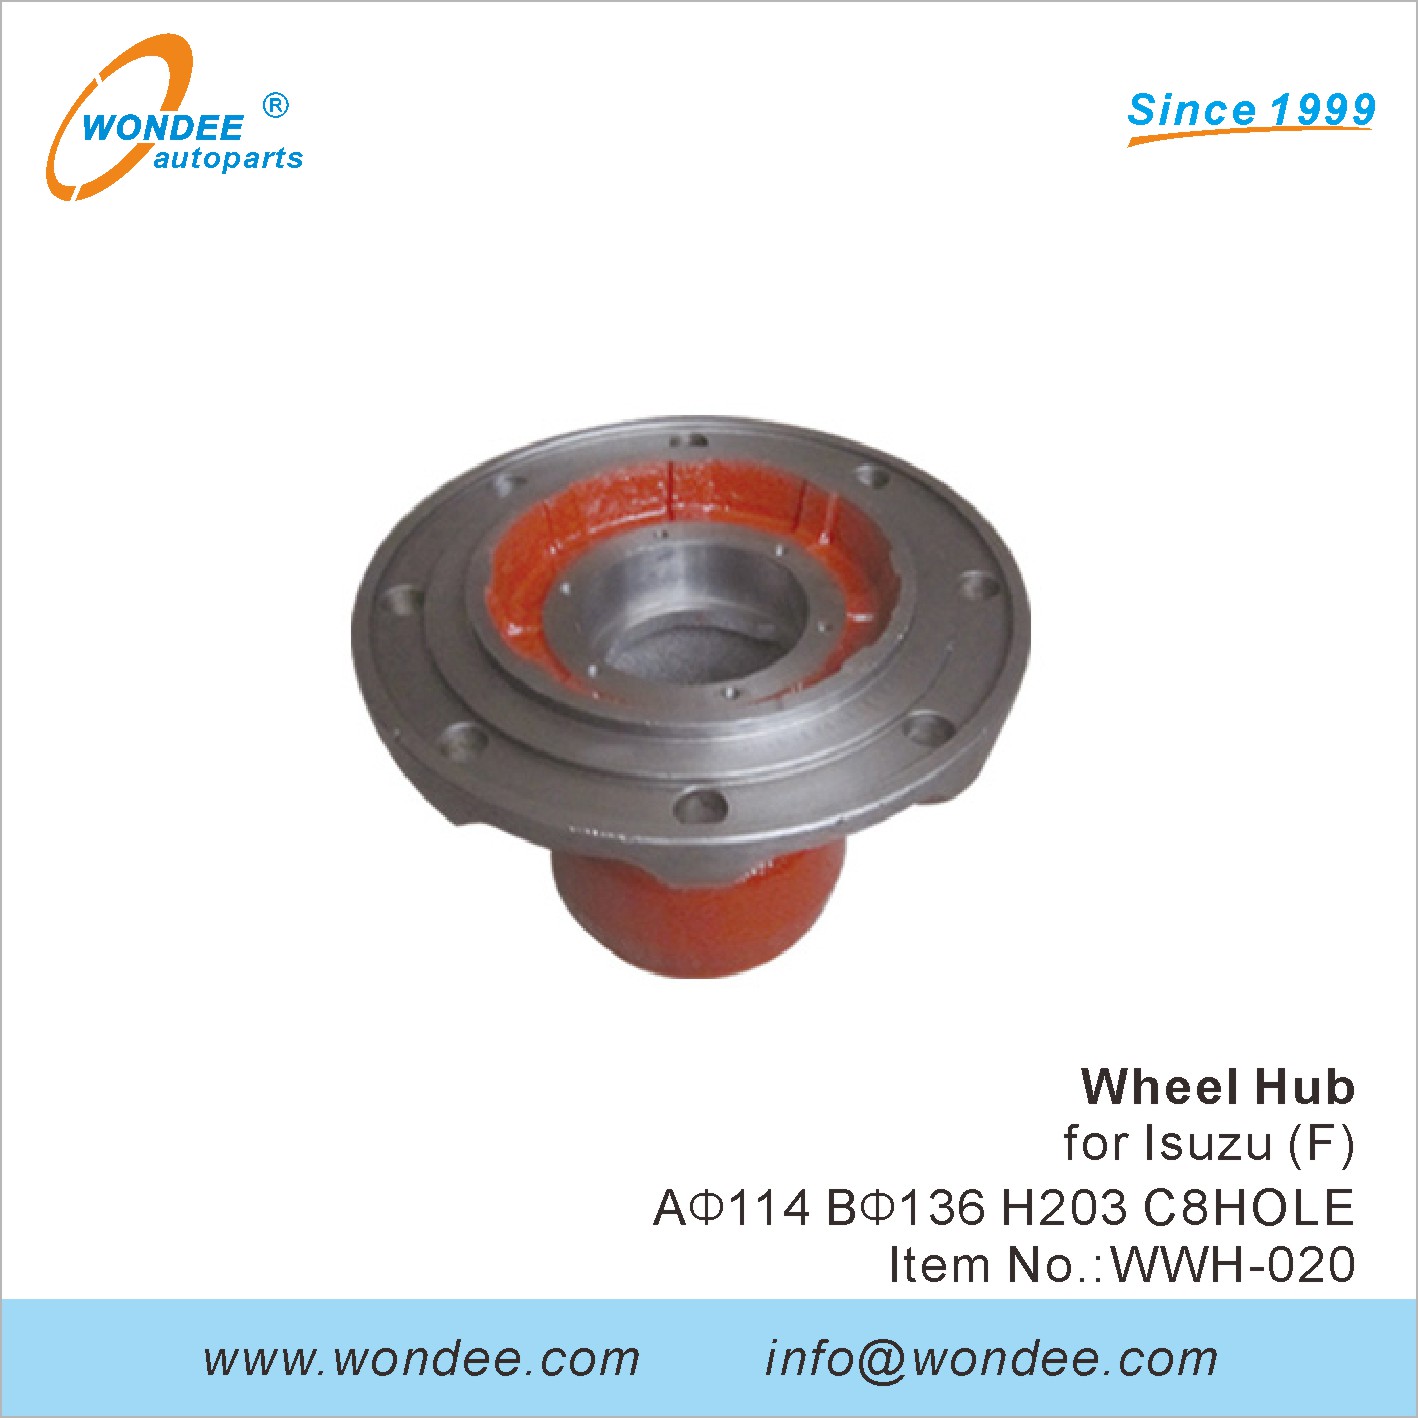 WONDEE wheel hub (20)